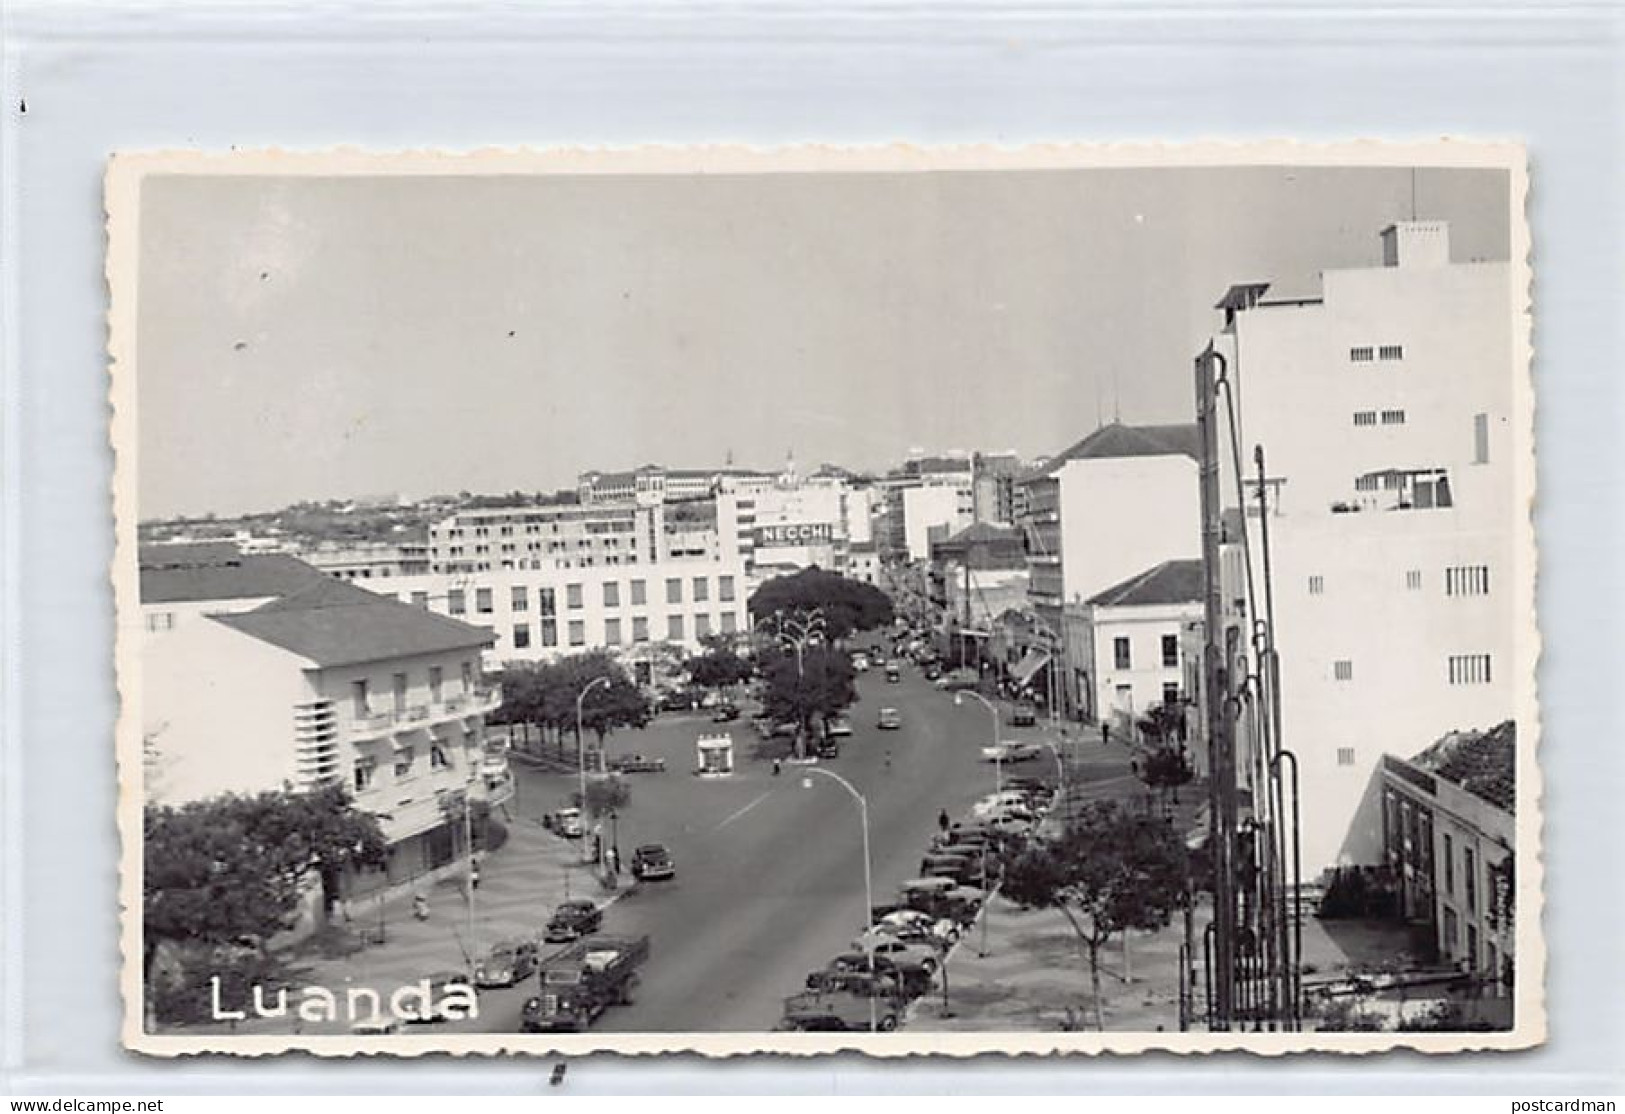 Angola - LUANDA - Main Avenue - REAL PHOTO - Publ. Unknown  - Angola